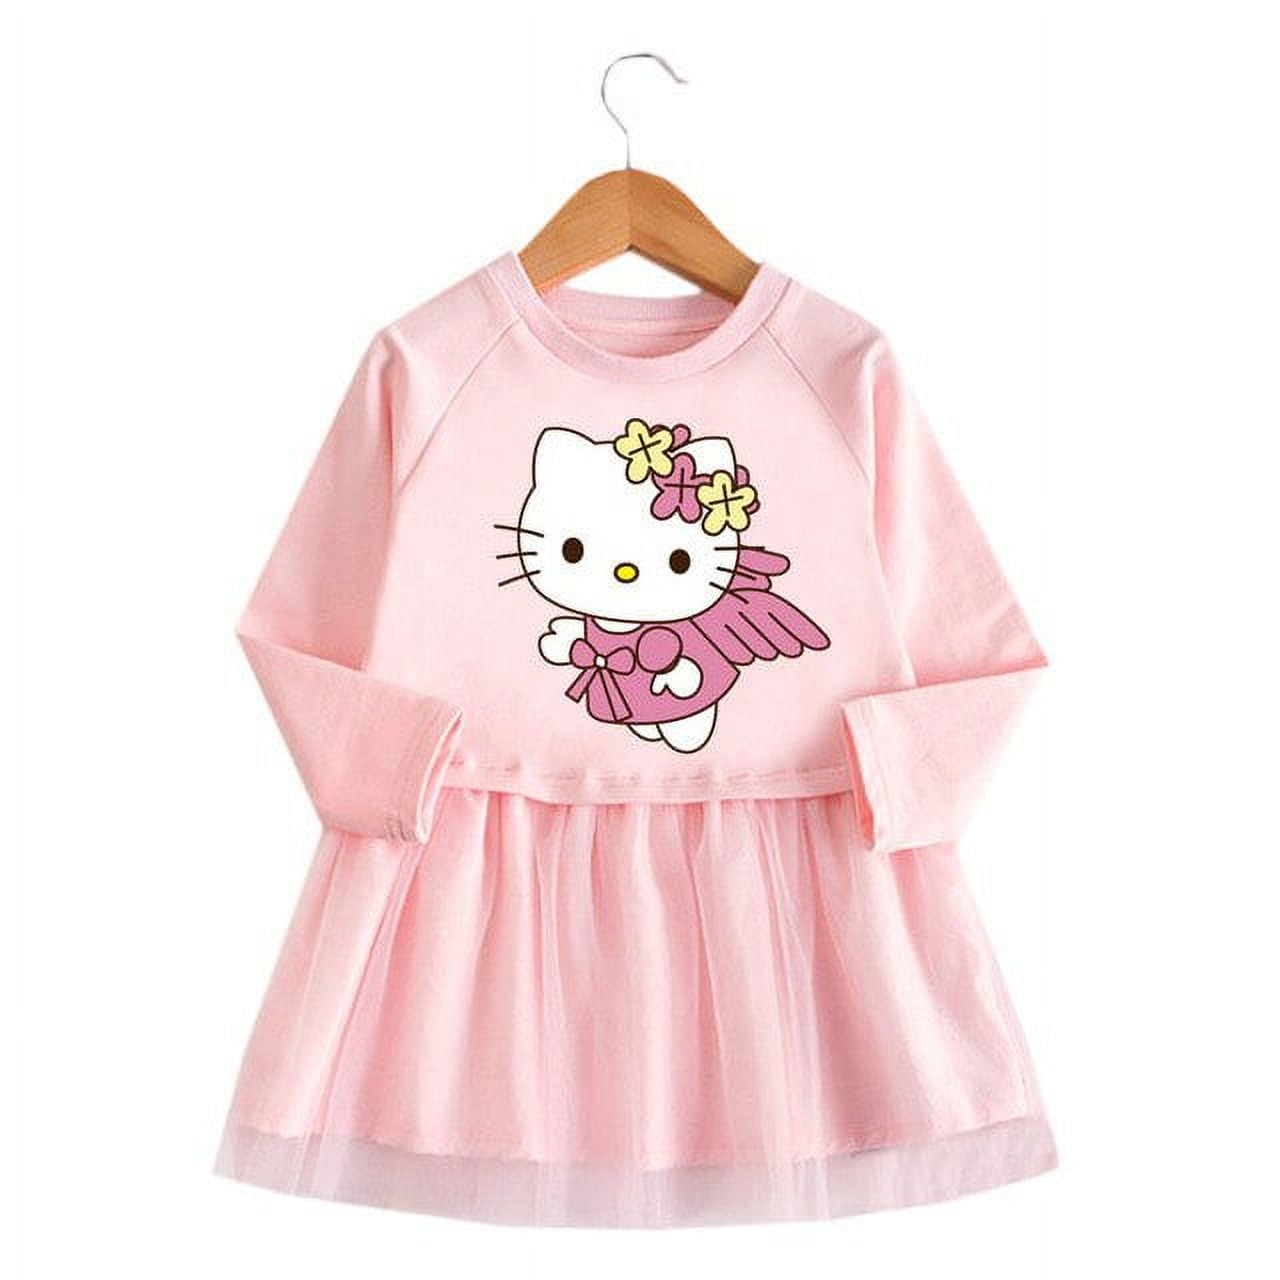 Hello Kitty New Cartoon Print Girls Cotton Fashion dress baby cute long ...